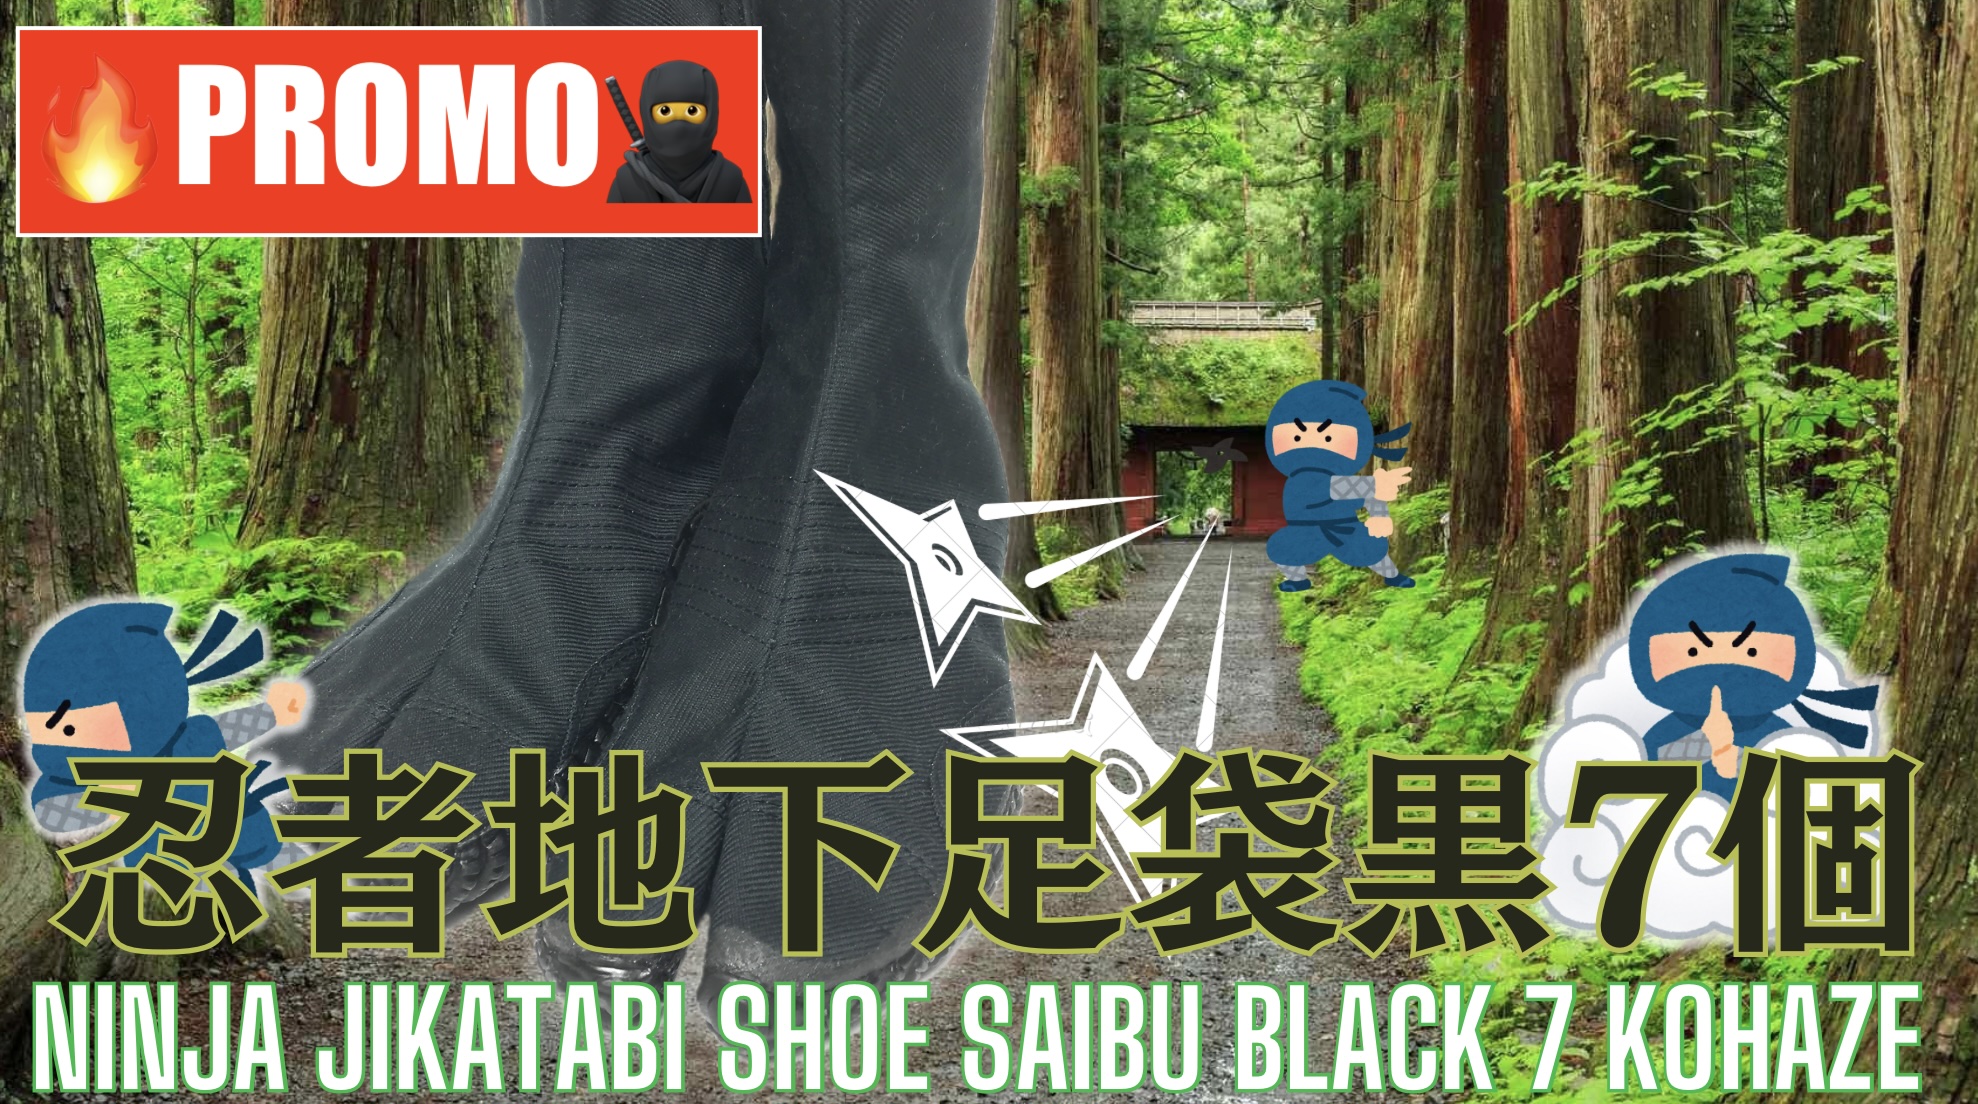 Chaussure Jikatabi Ninja Sabir noir 7 Kohaze 